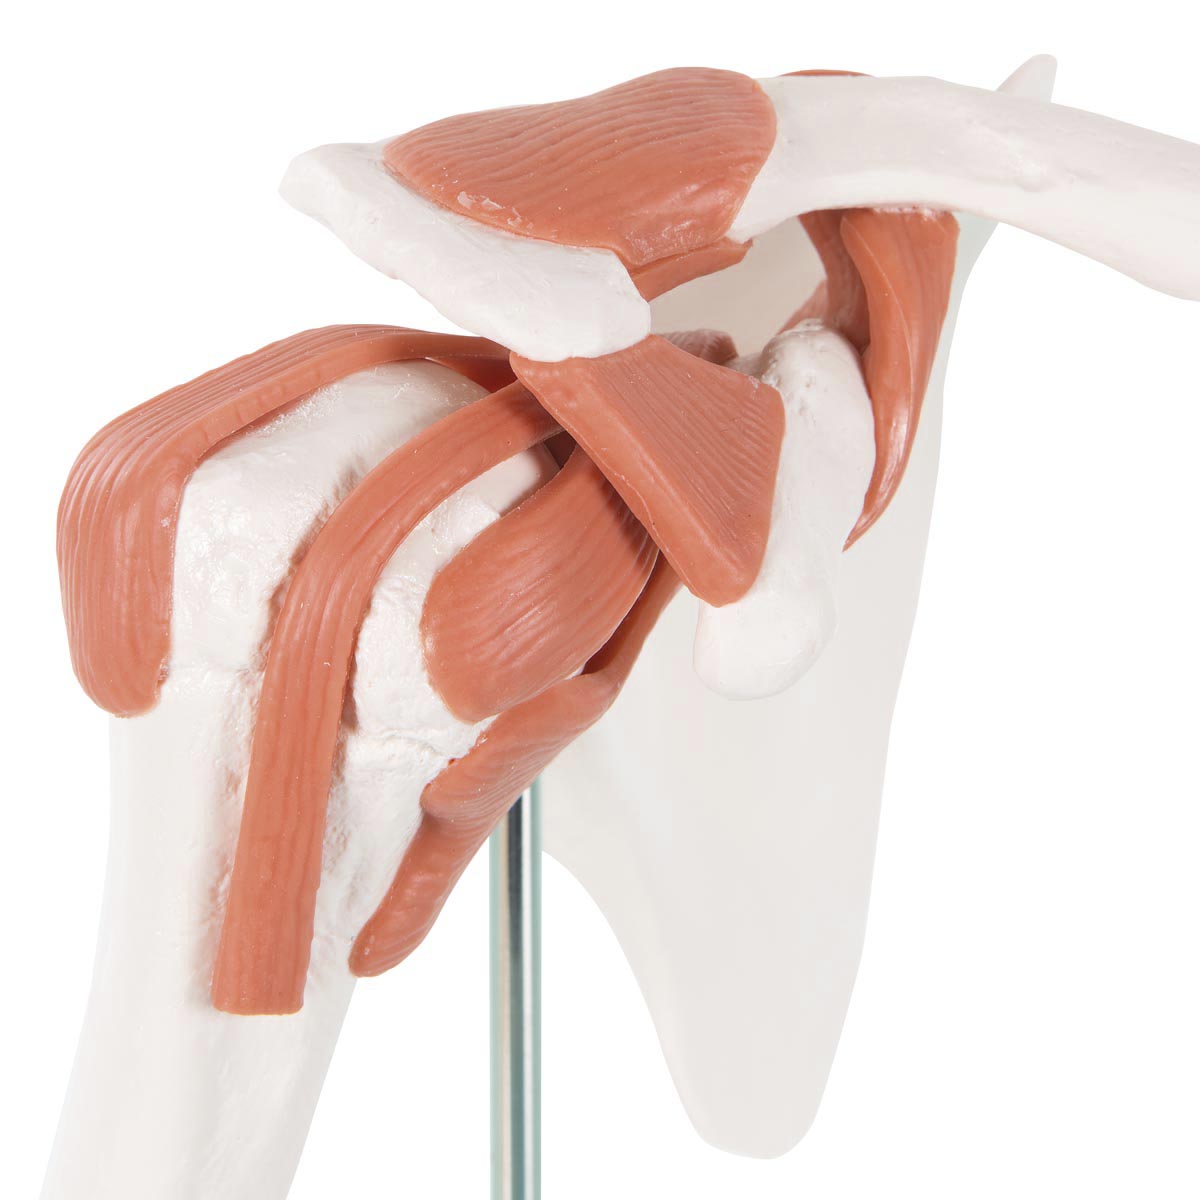 Flexibel axelmodell med ligament